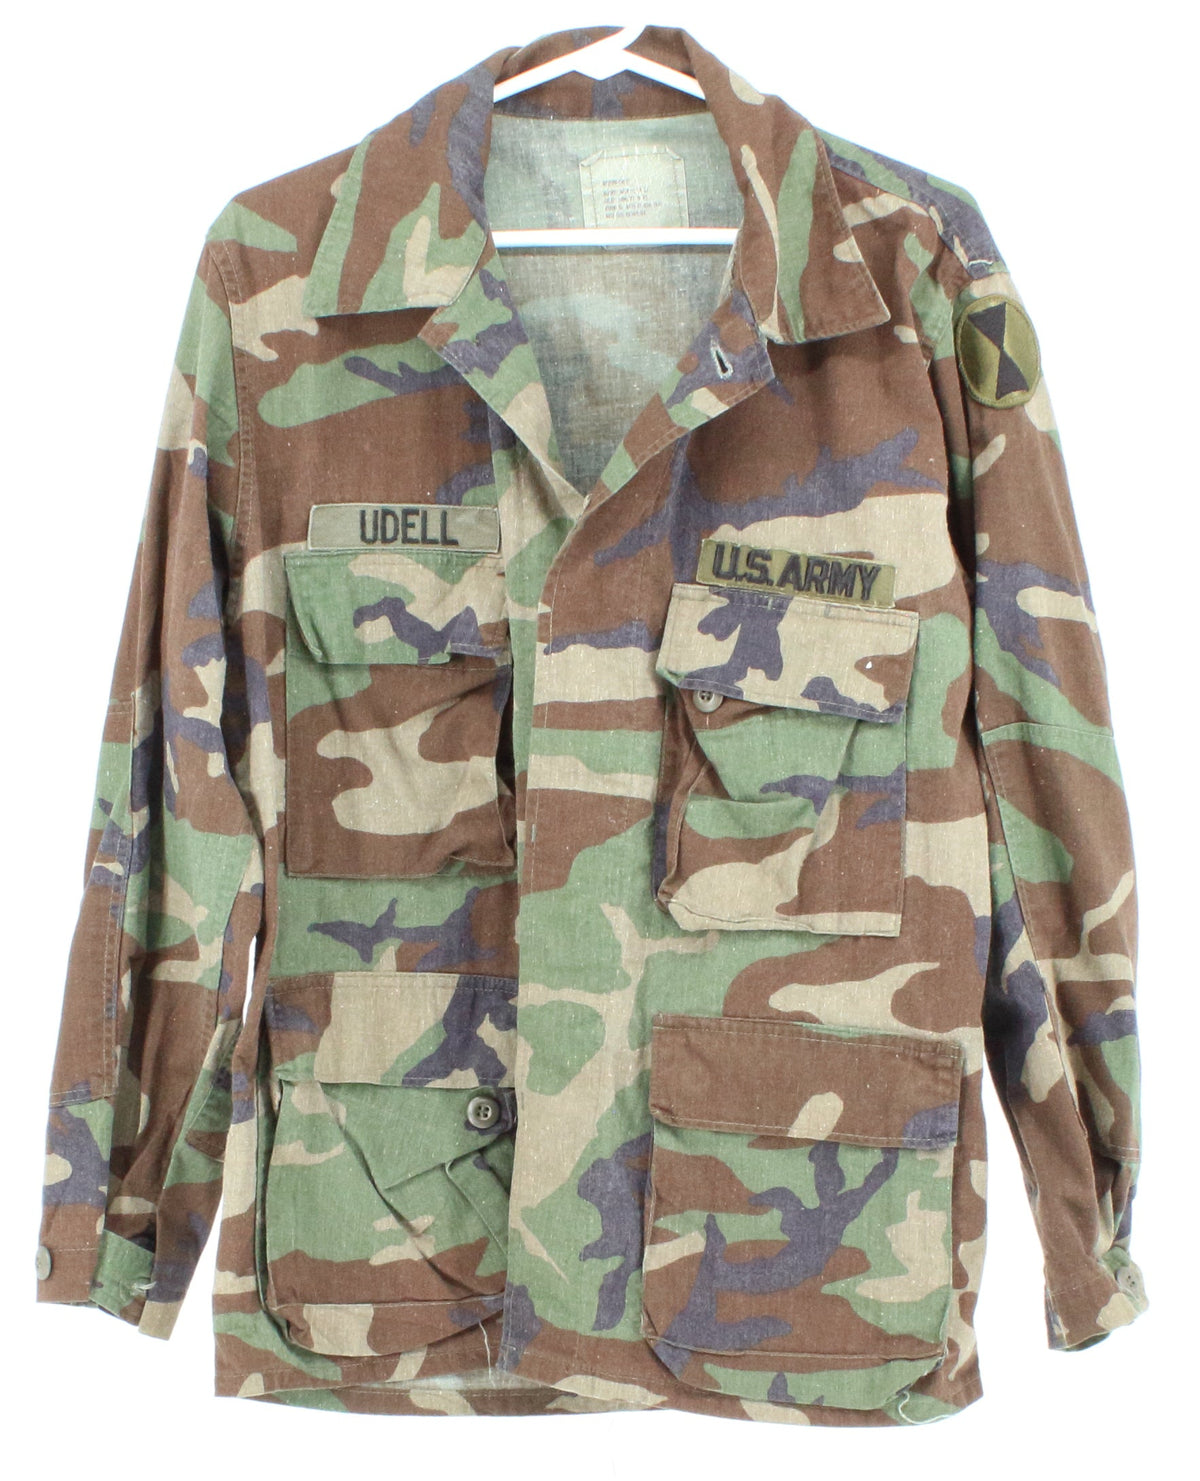 U.S.A  Army Udell Multi Pockets Camo Military Uniform Shirt